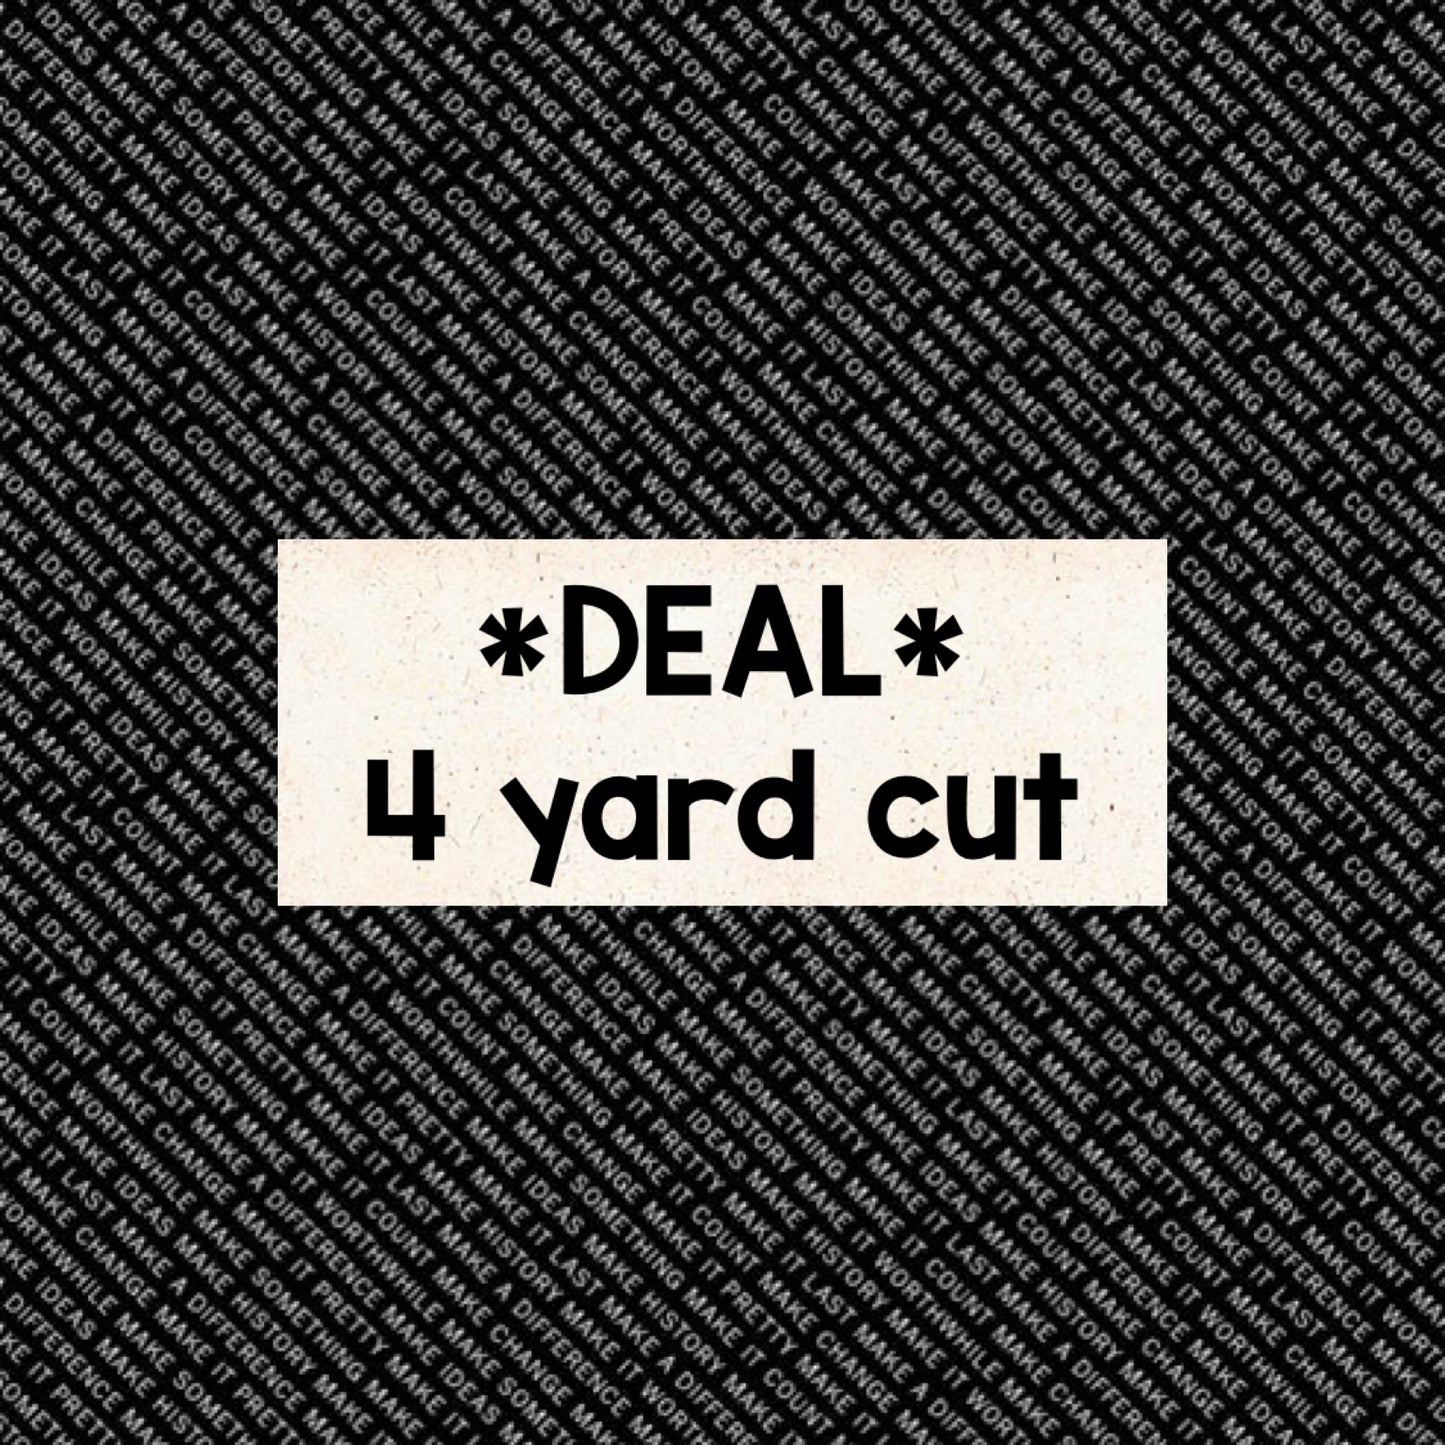 Breaking News Black 4 Yard Cut Deal